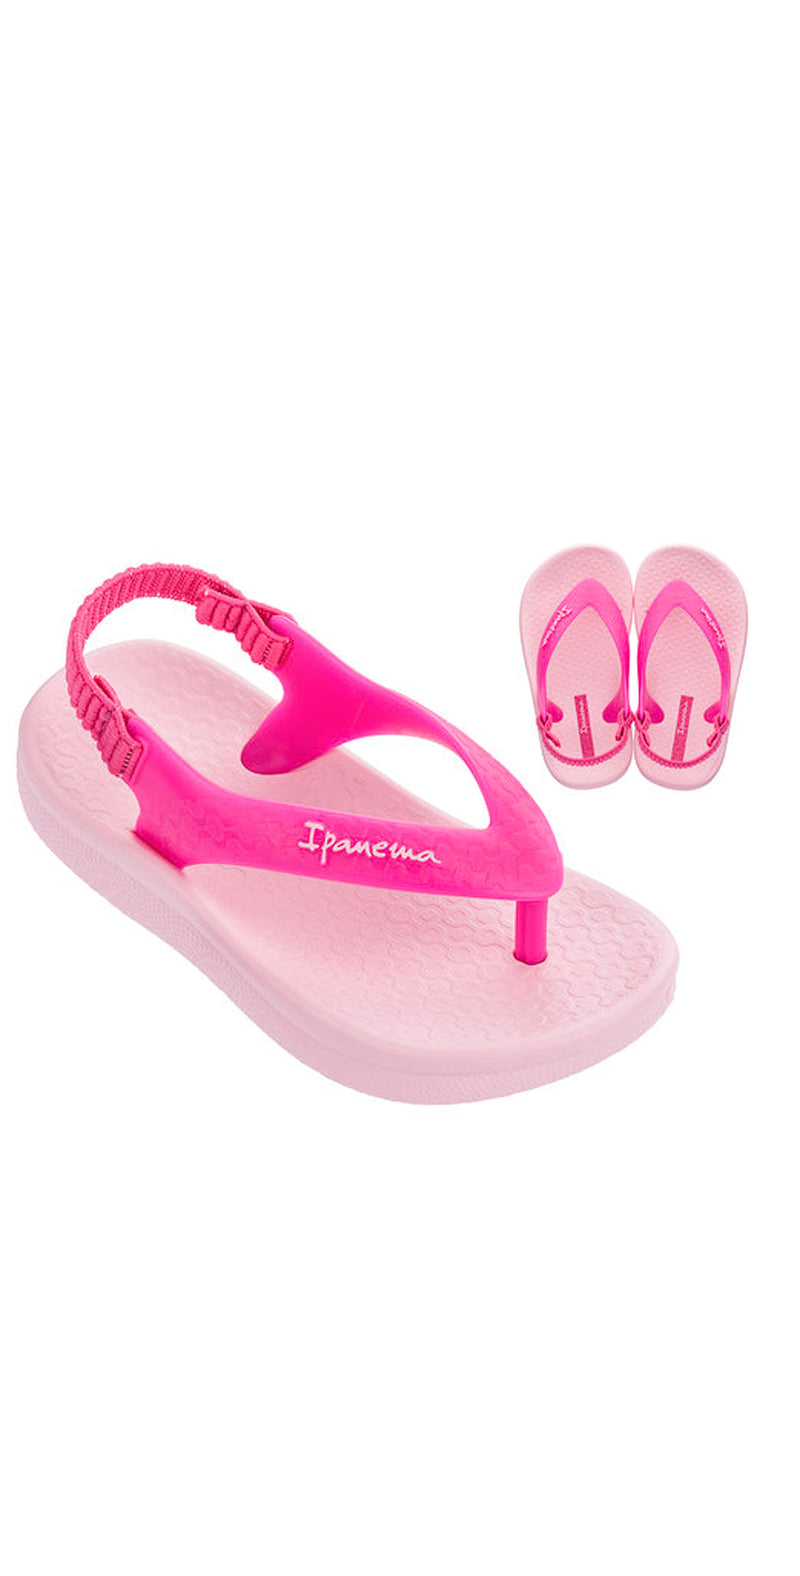  iPanema Ana Tan Baby Sandals Pink